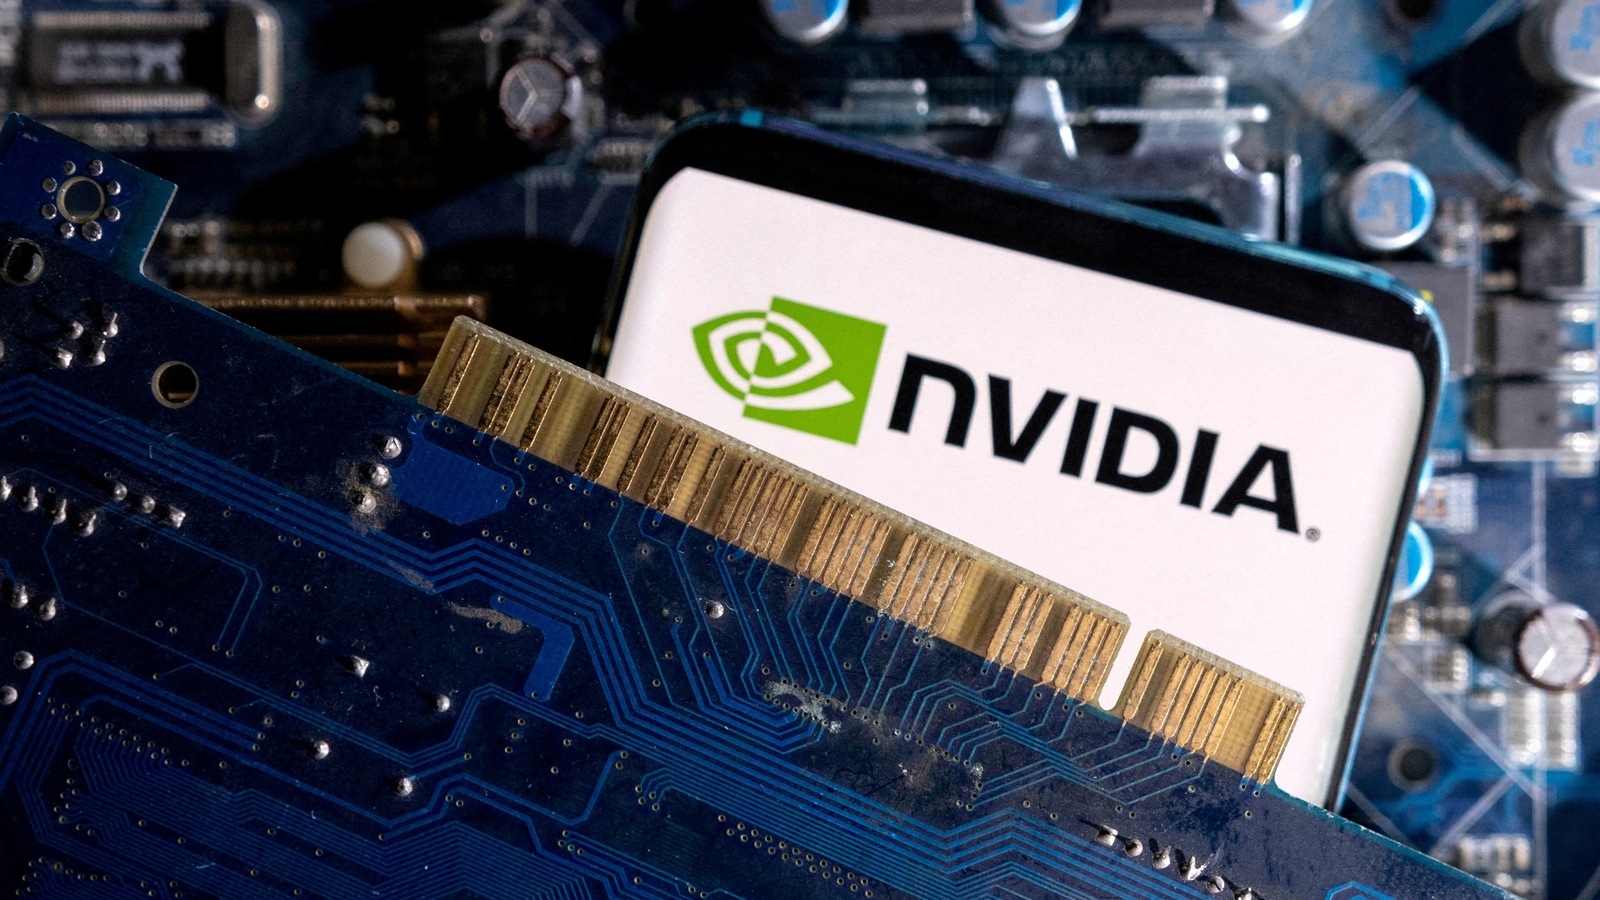 Nvidia CEO Touts India as Major AI Market in Bid to Hedge China Risks